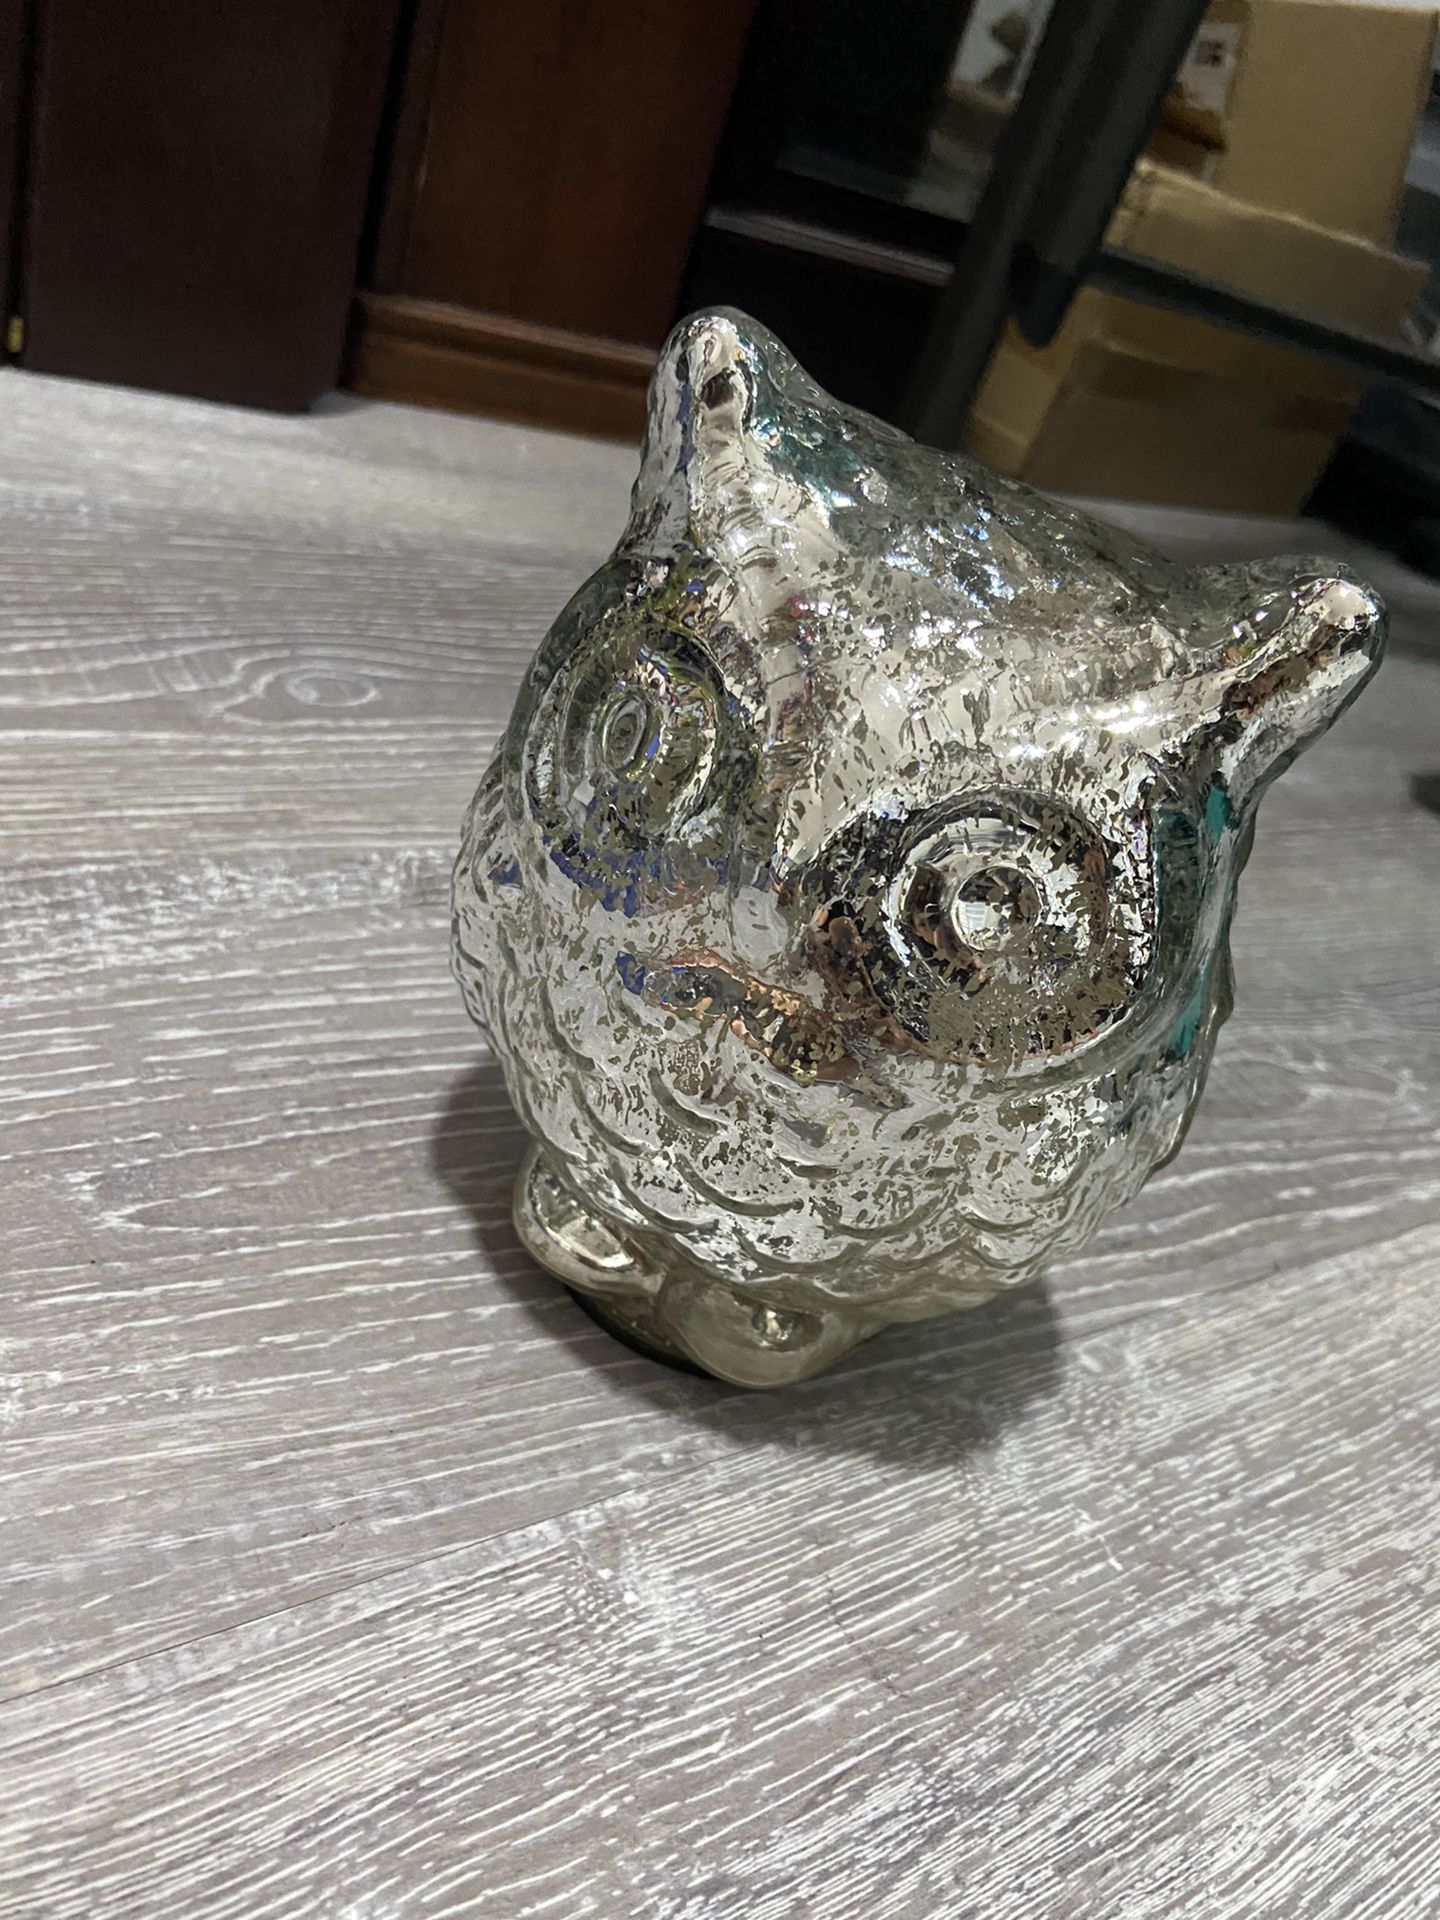 Mini owl statue